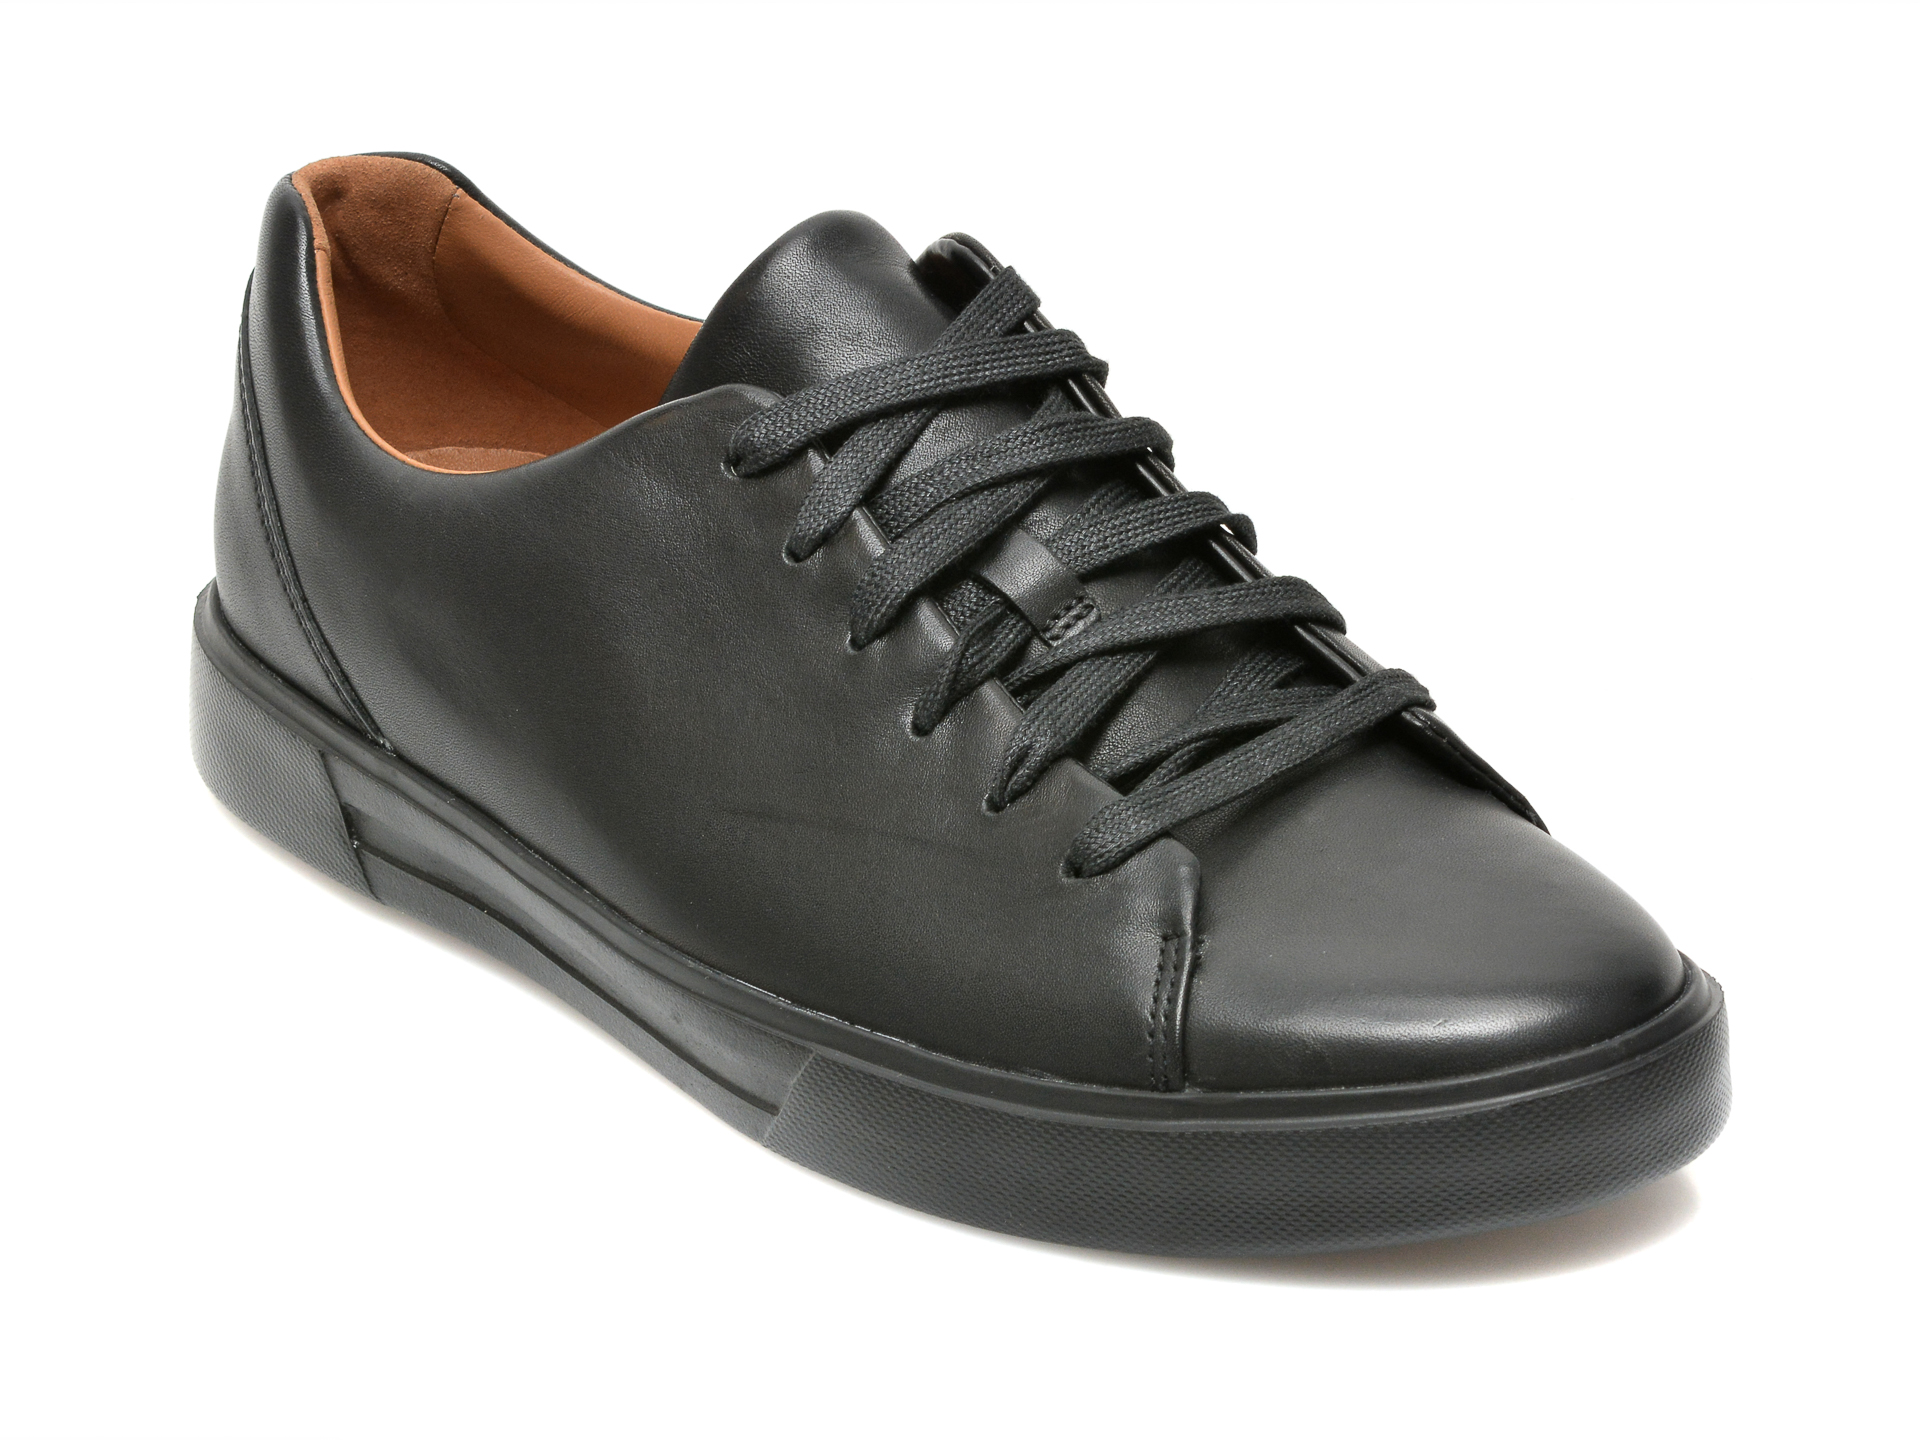 Pantofi CLARKS negri, UN COSTA LACE, din piele naturala Clarks imagine 2022 13clothing.ro